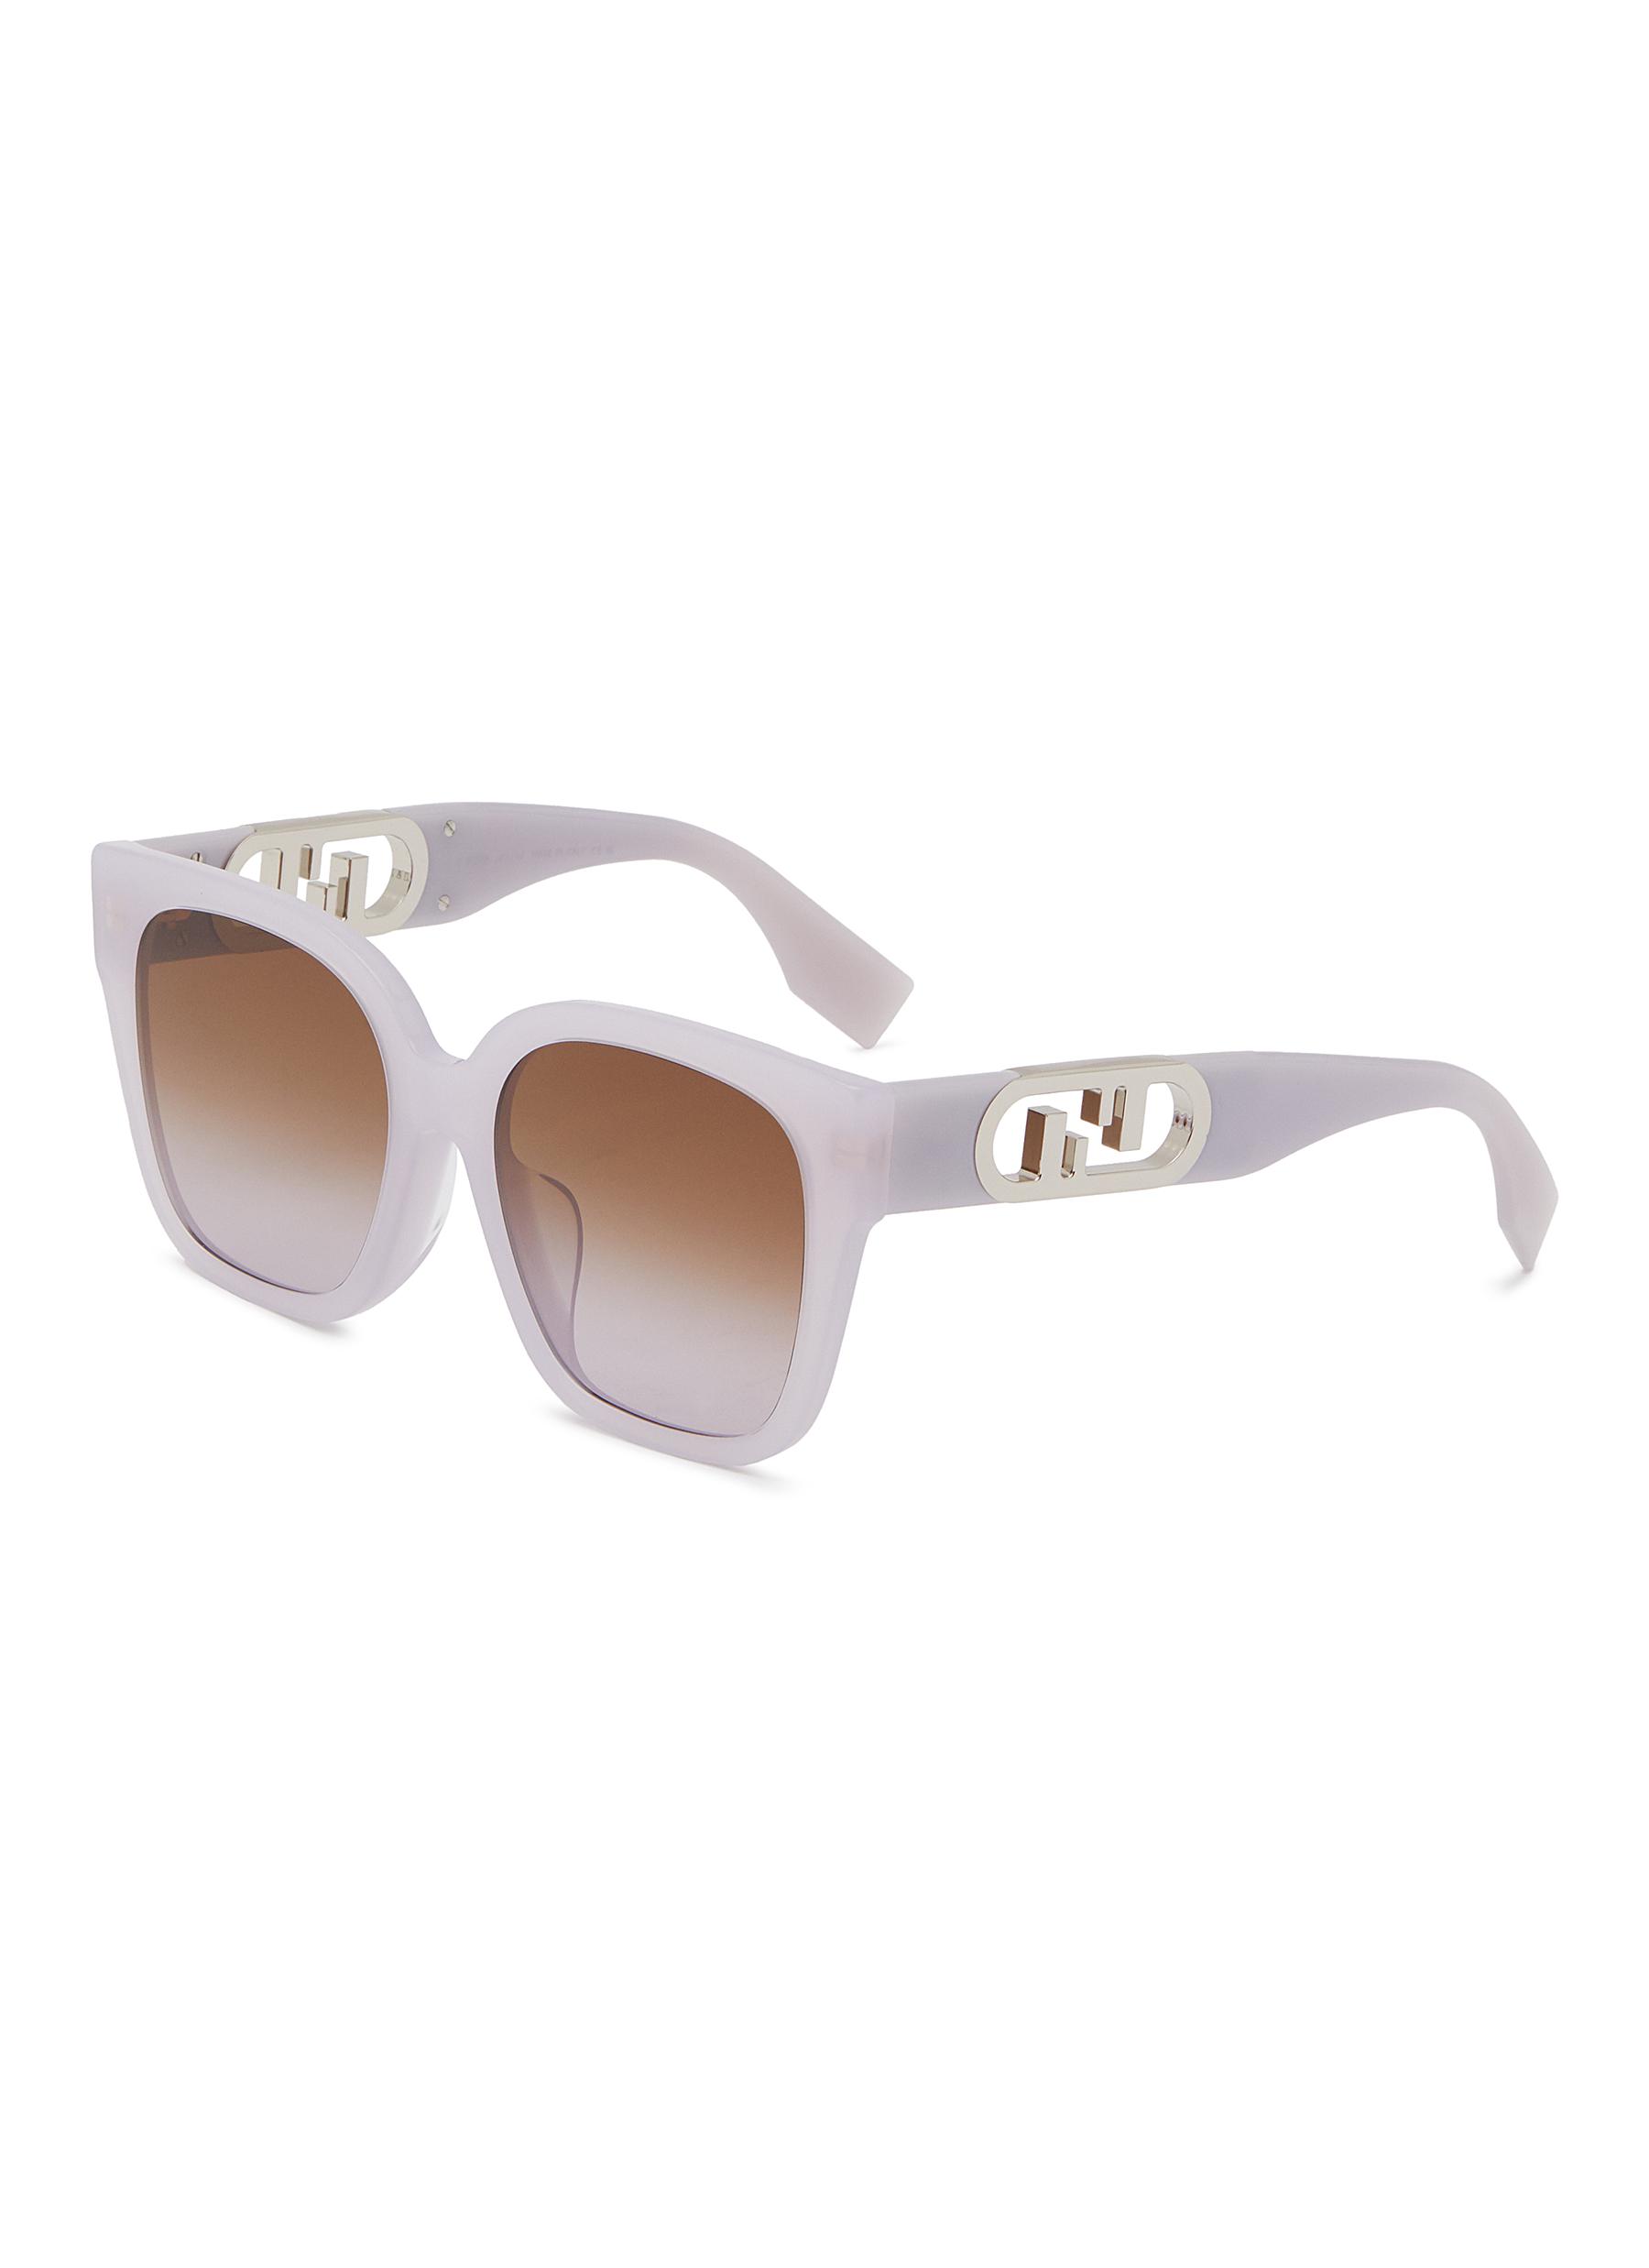 Brown O'lock square acetate sunglasses, Fendi